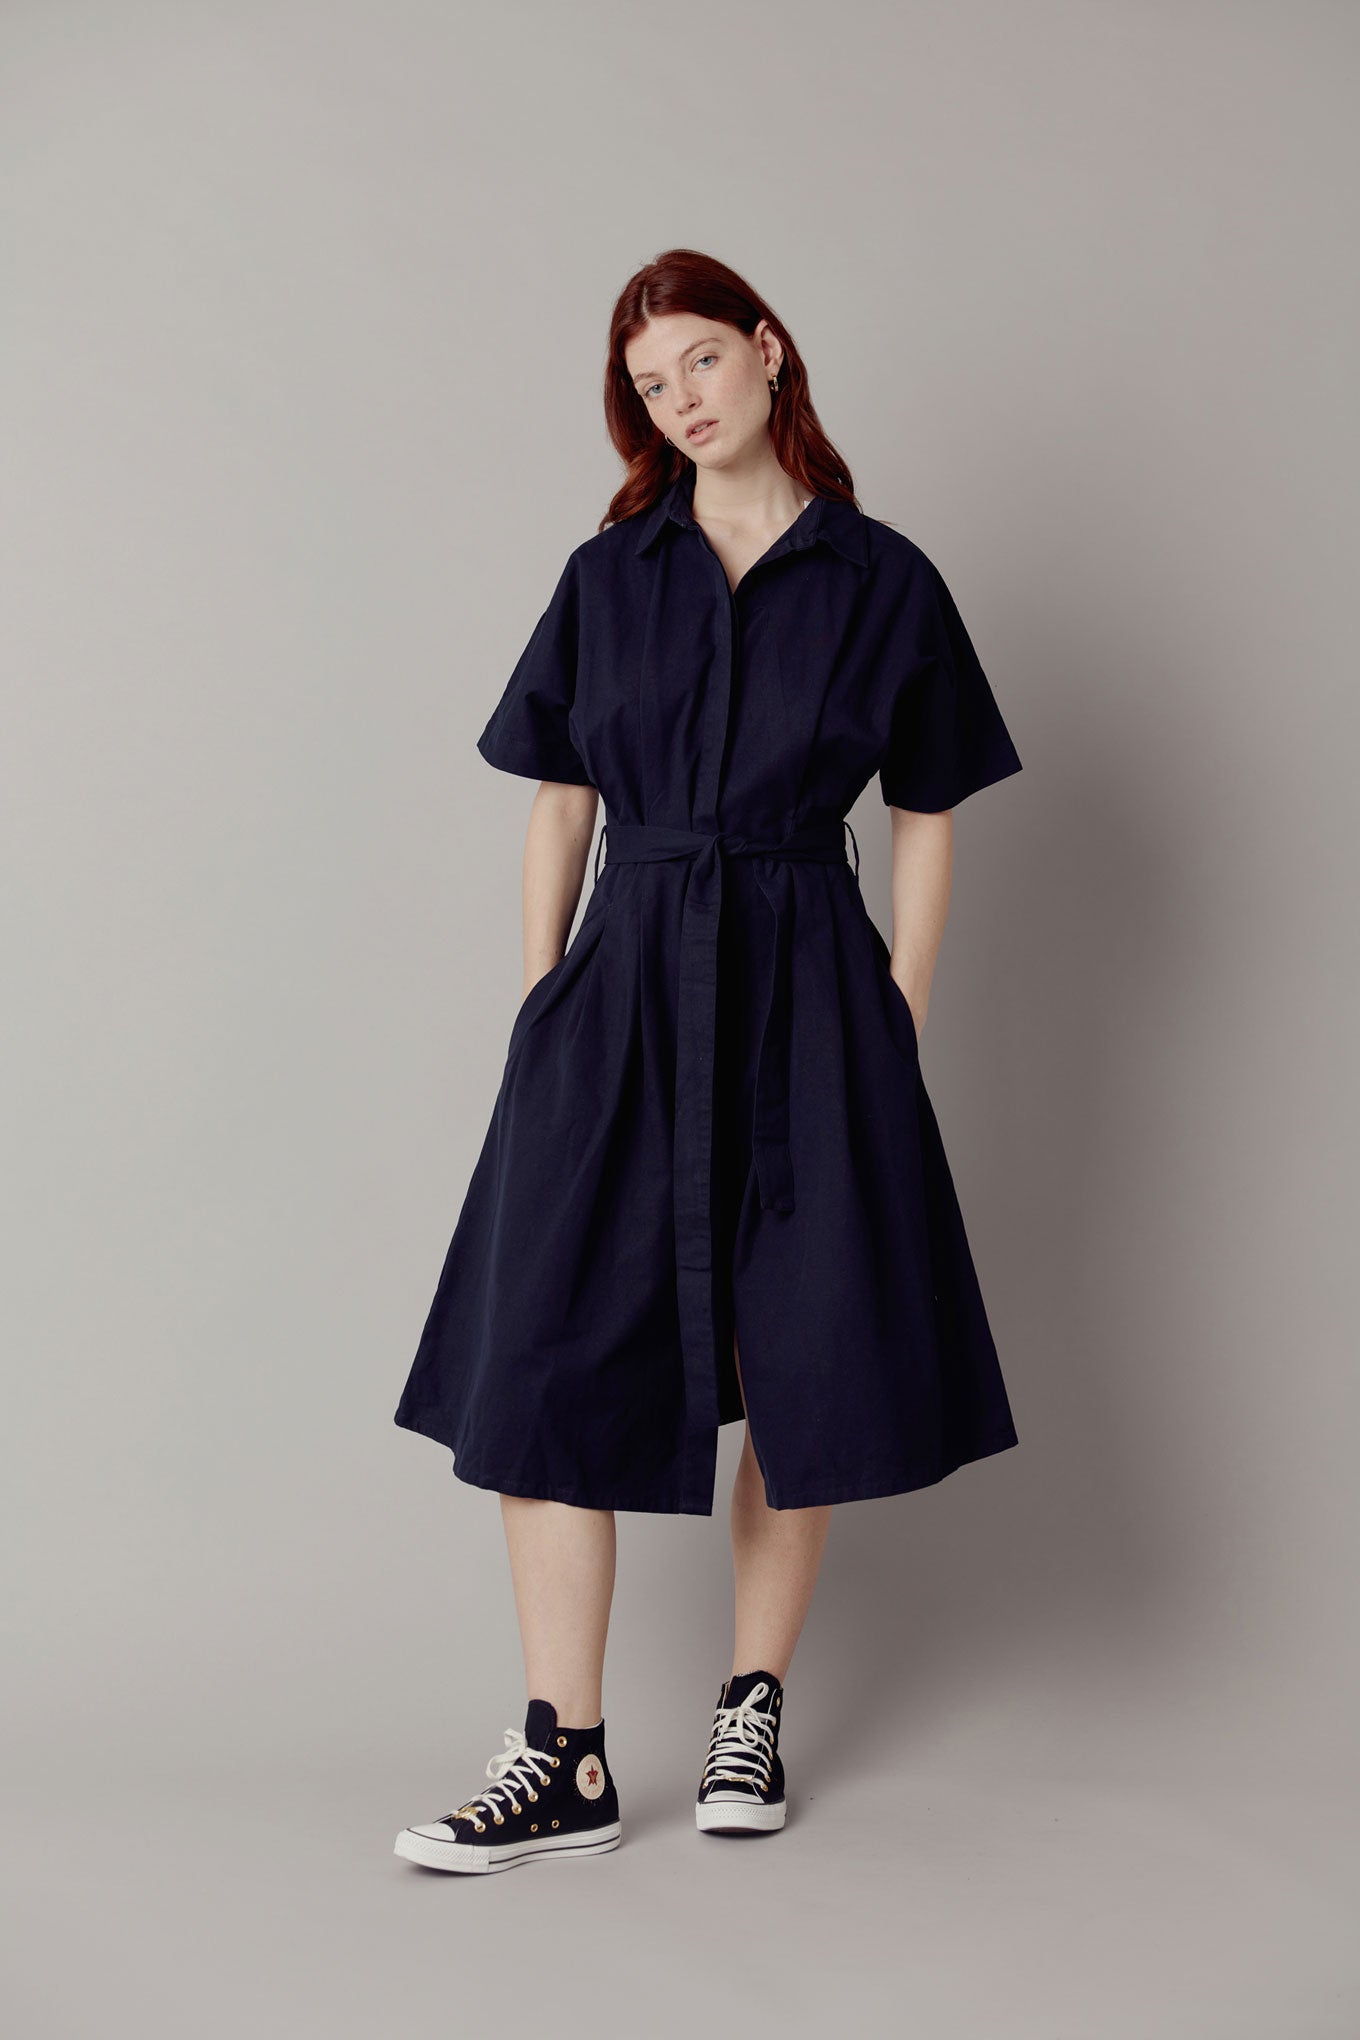 ASHES Organic Cotton Dress - Navy, SIZE 1 / UK 8 / EUR 36